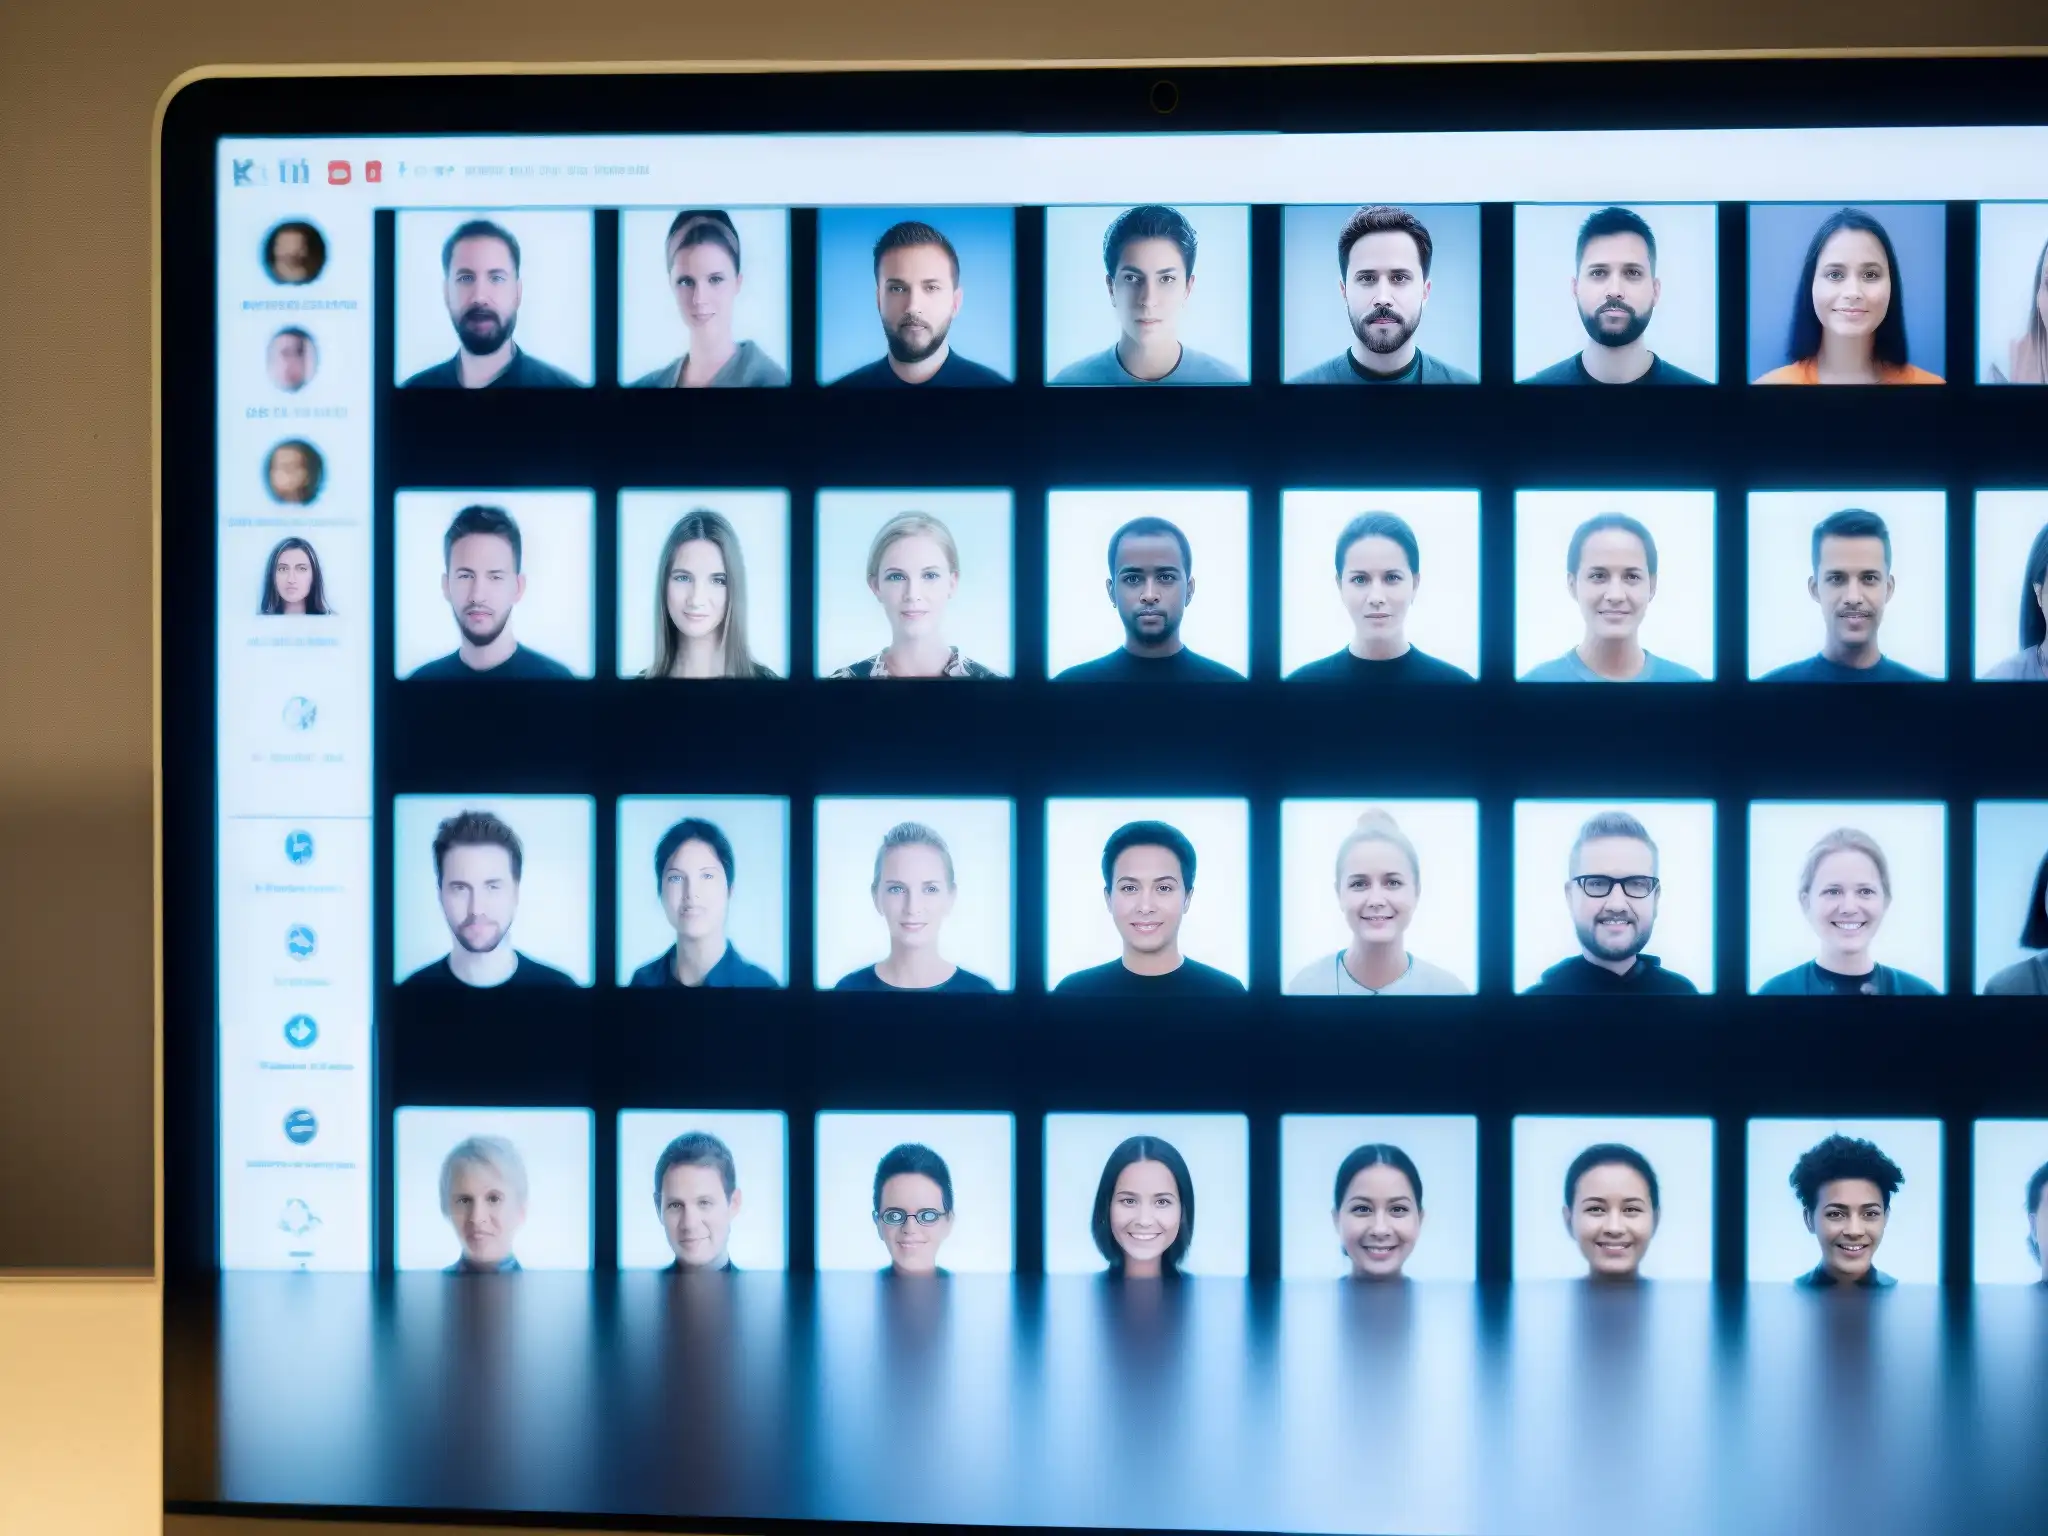 Enigmática desaparición de perfiles en pantalla, evocando misterio digital